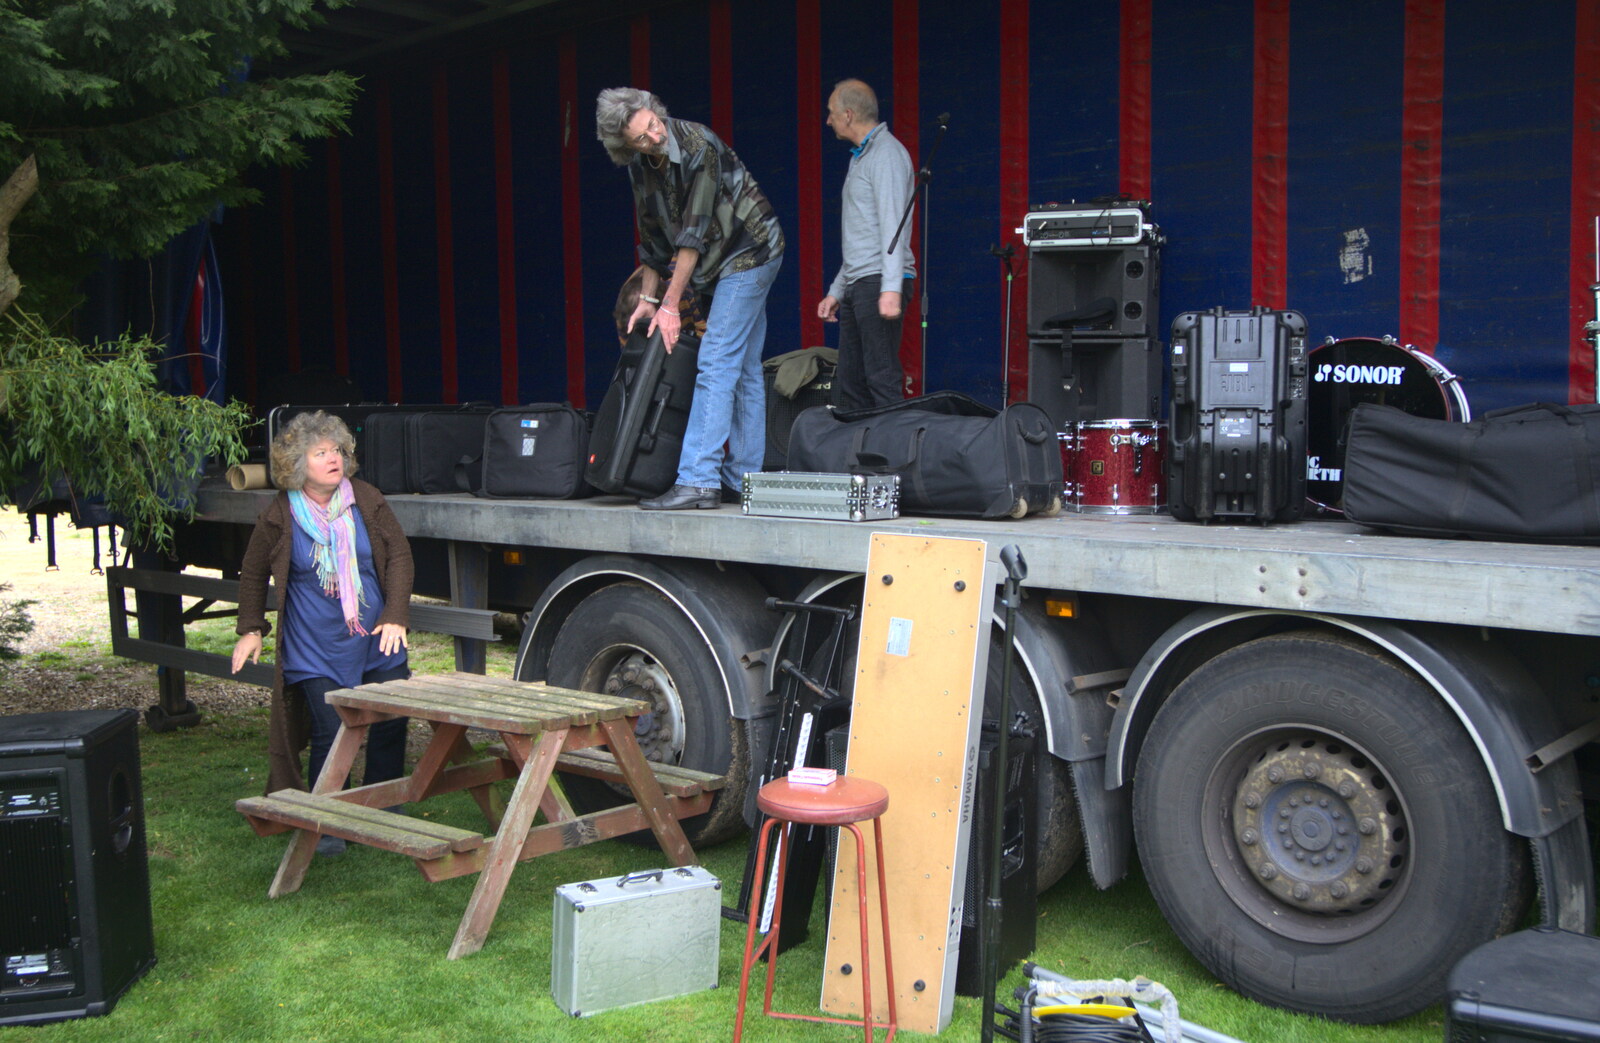 The BBs at the White Hart, Roydon, Norfolk - 1st June 2012: At Roydon, The BBs set up